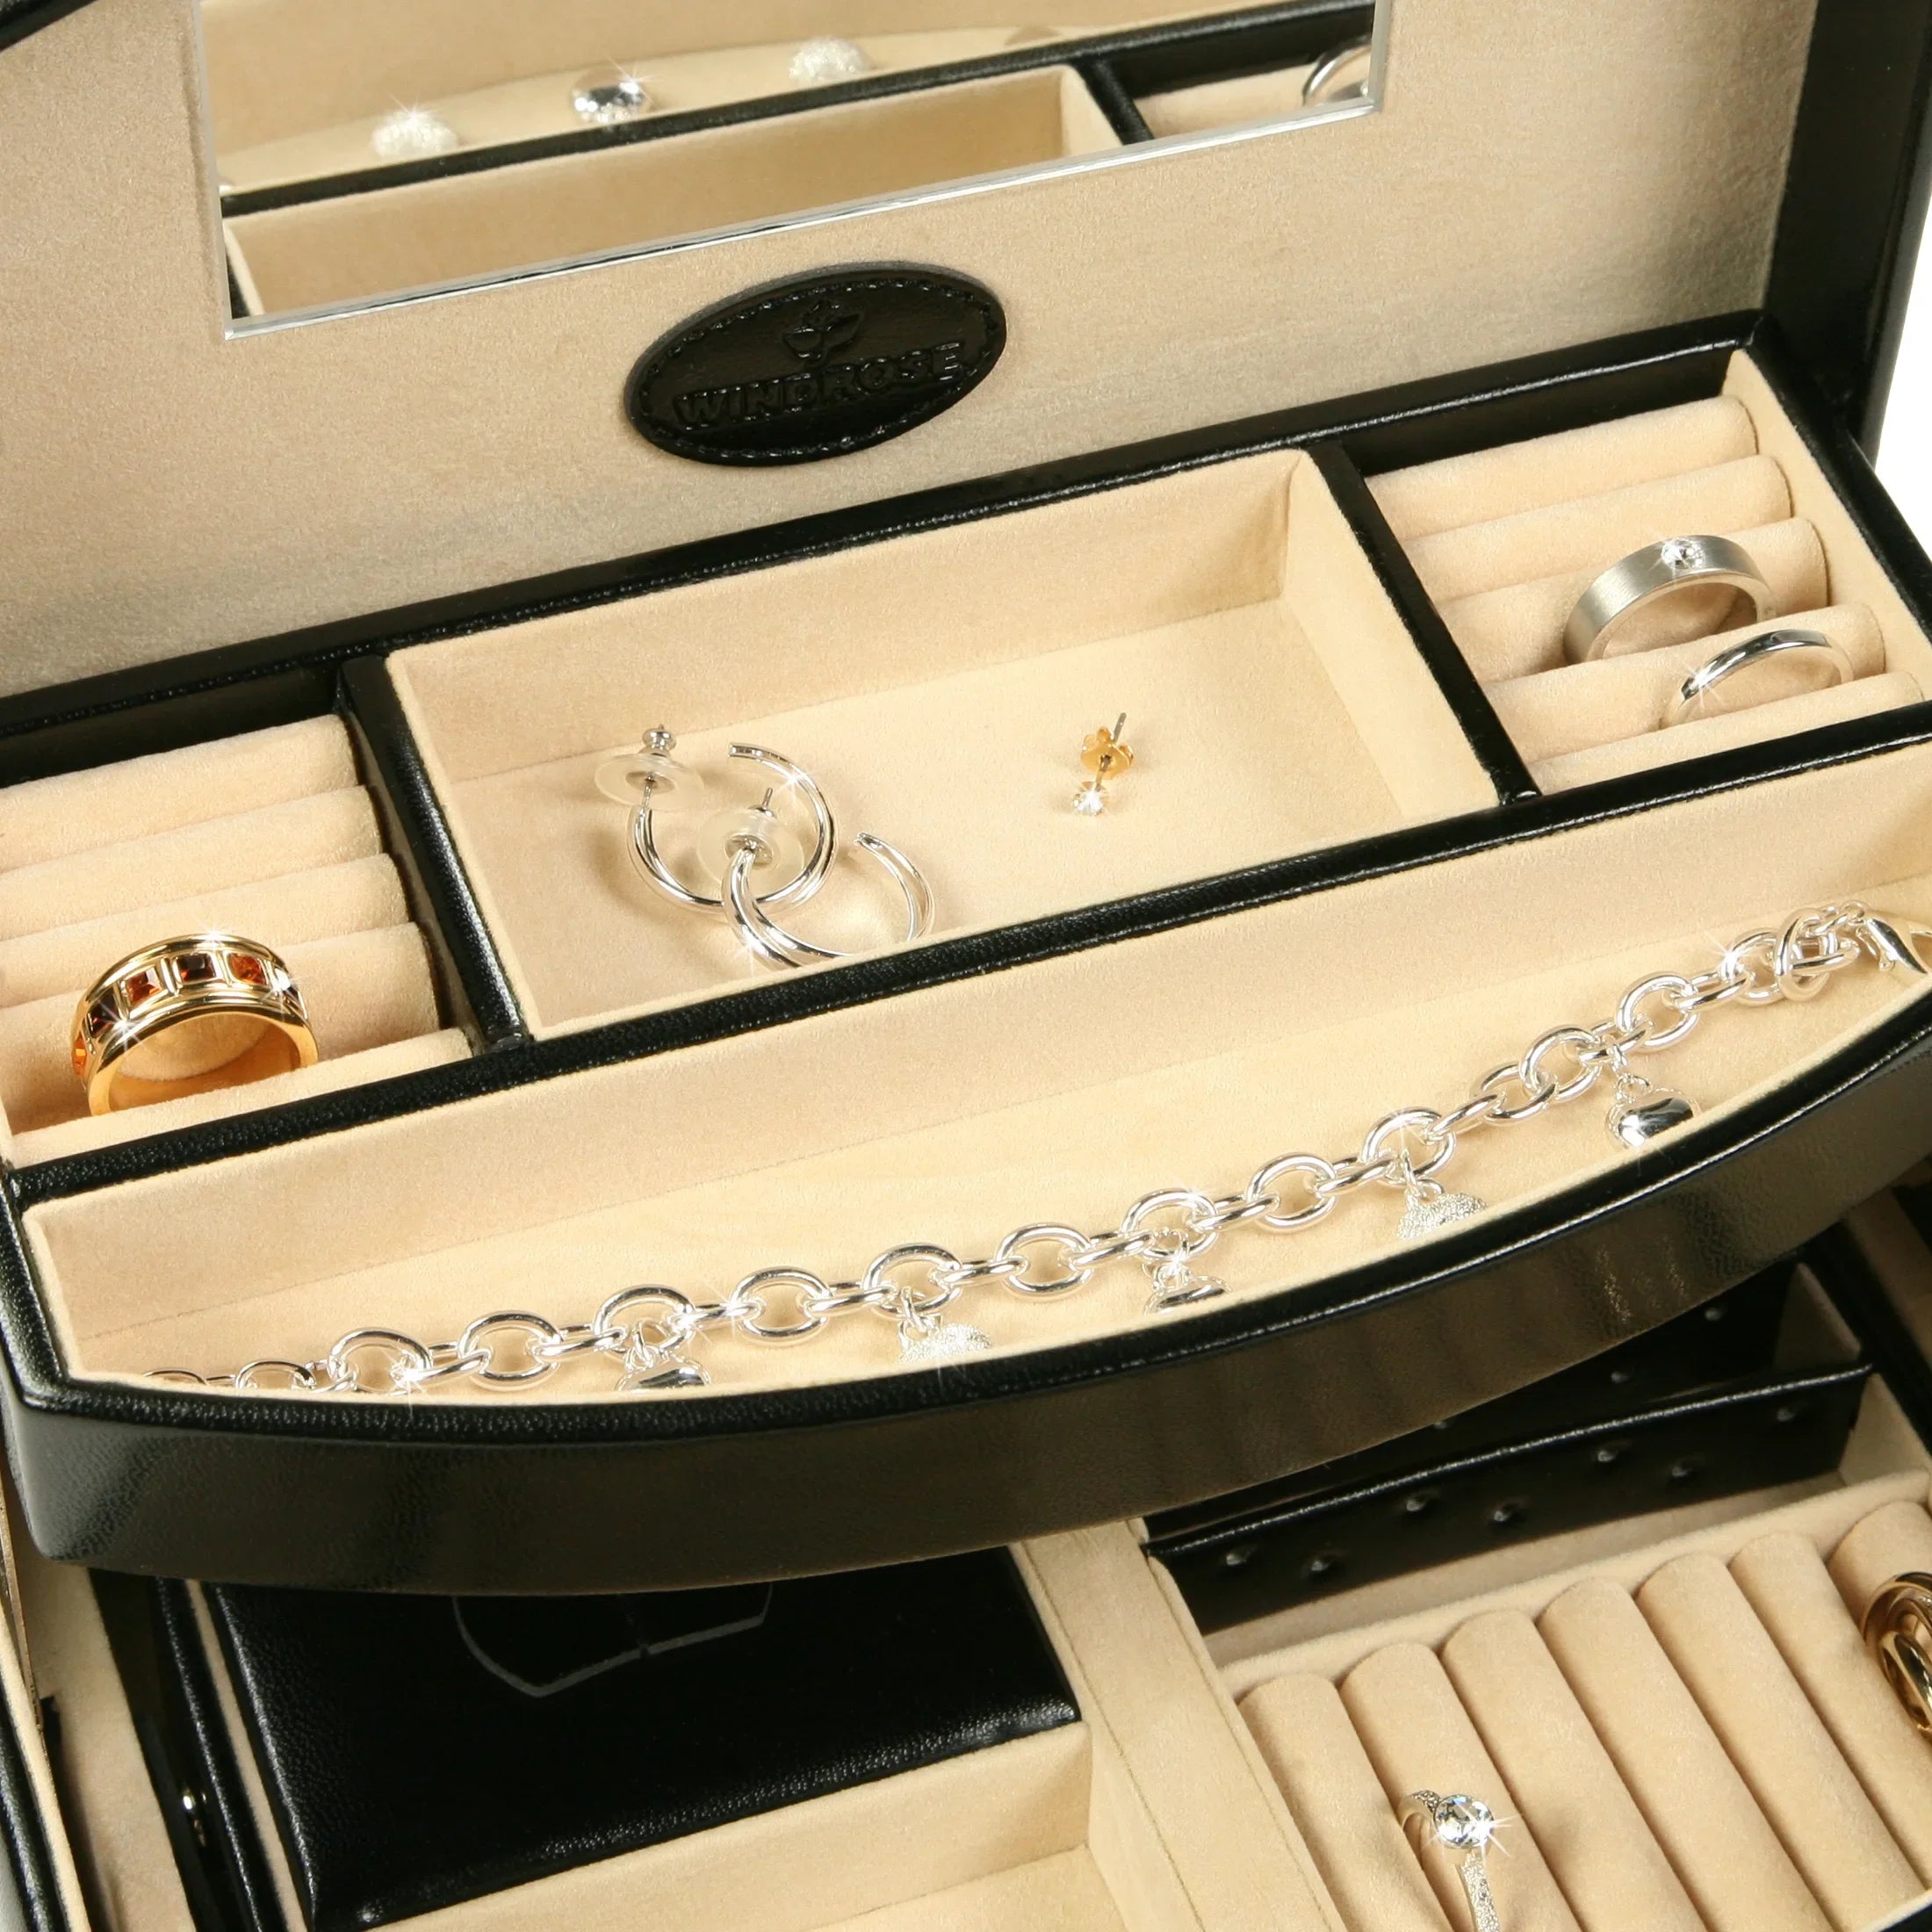 Windrose Merino automatic jewelry case with insert 23 cm - black